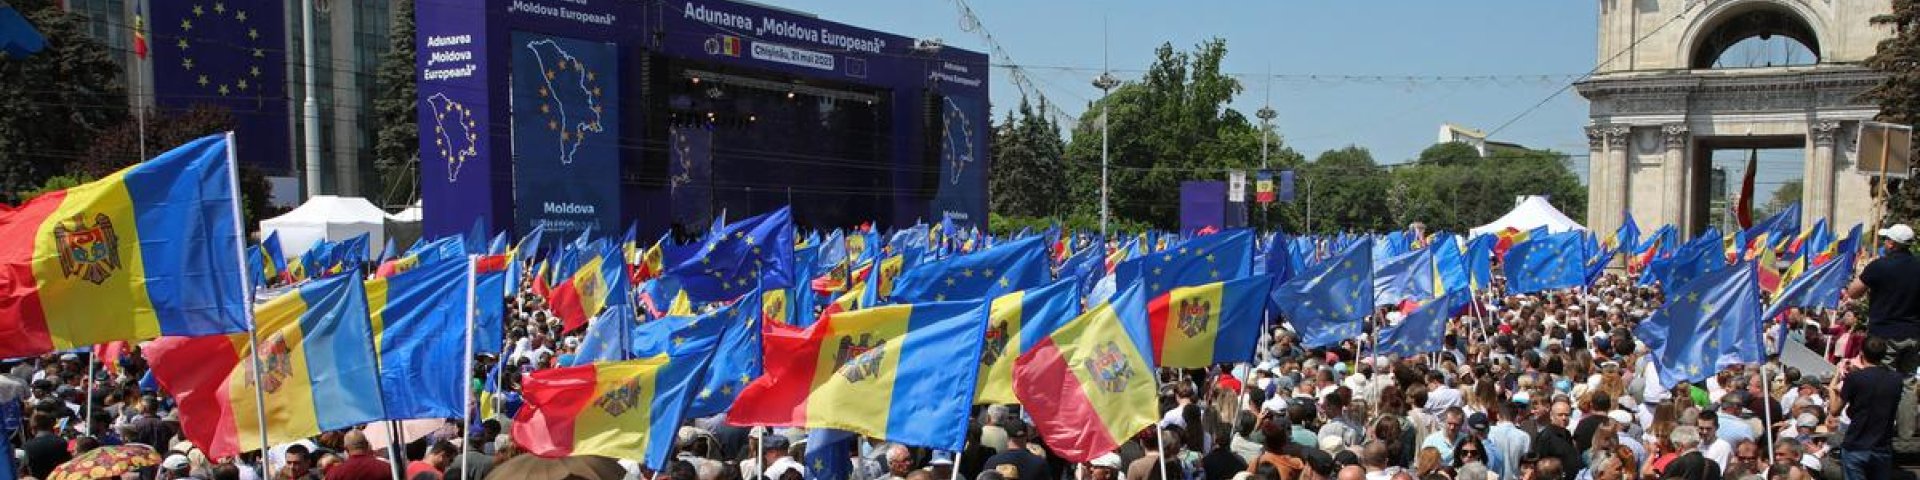 Flags of Moldova among the crowd 